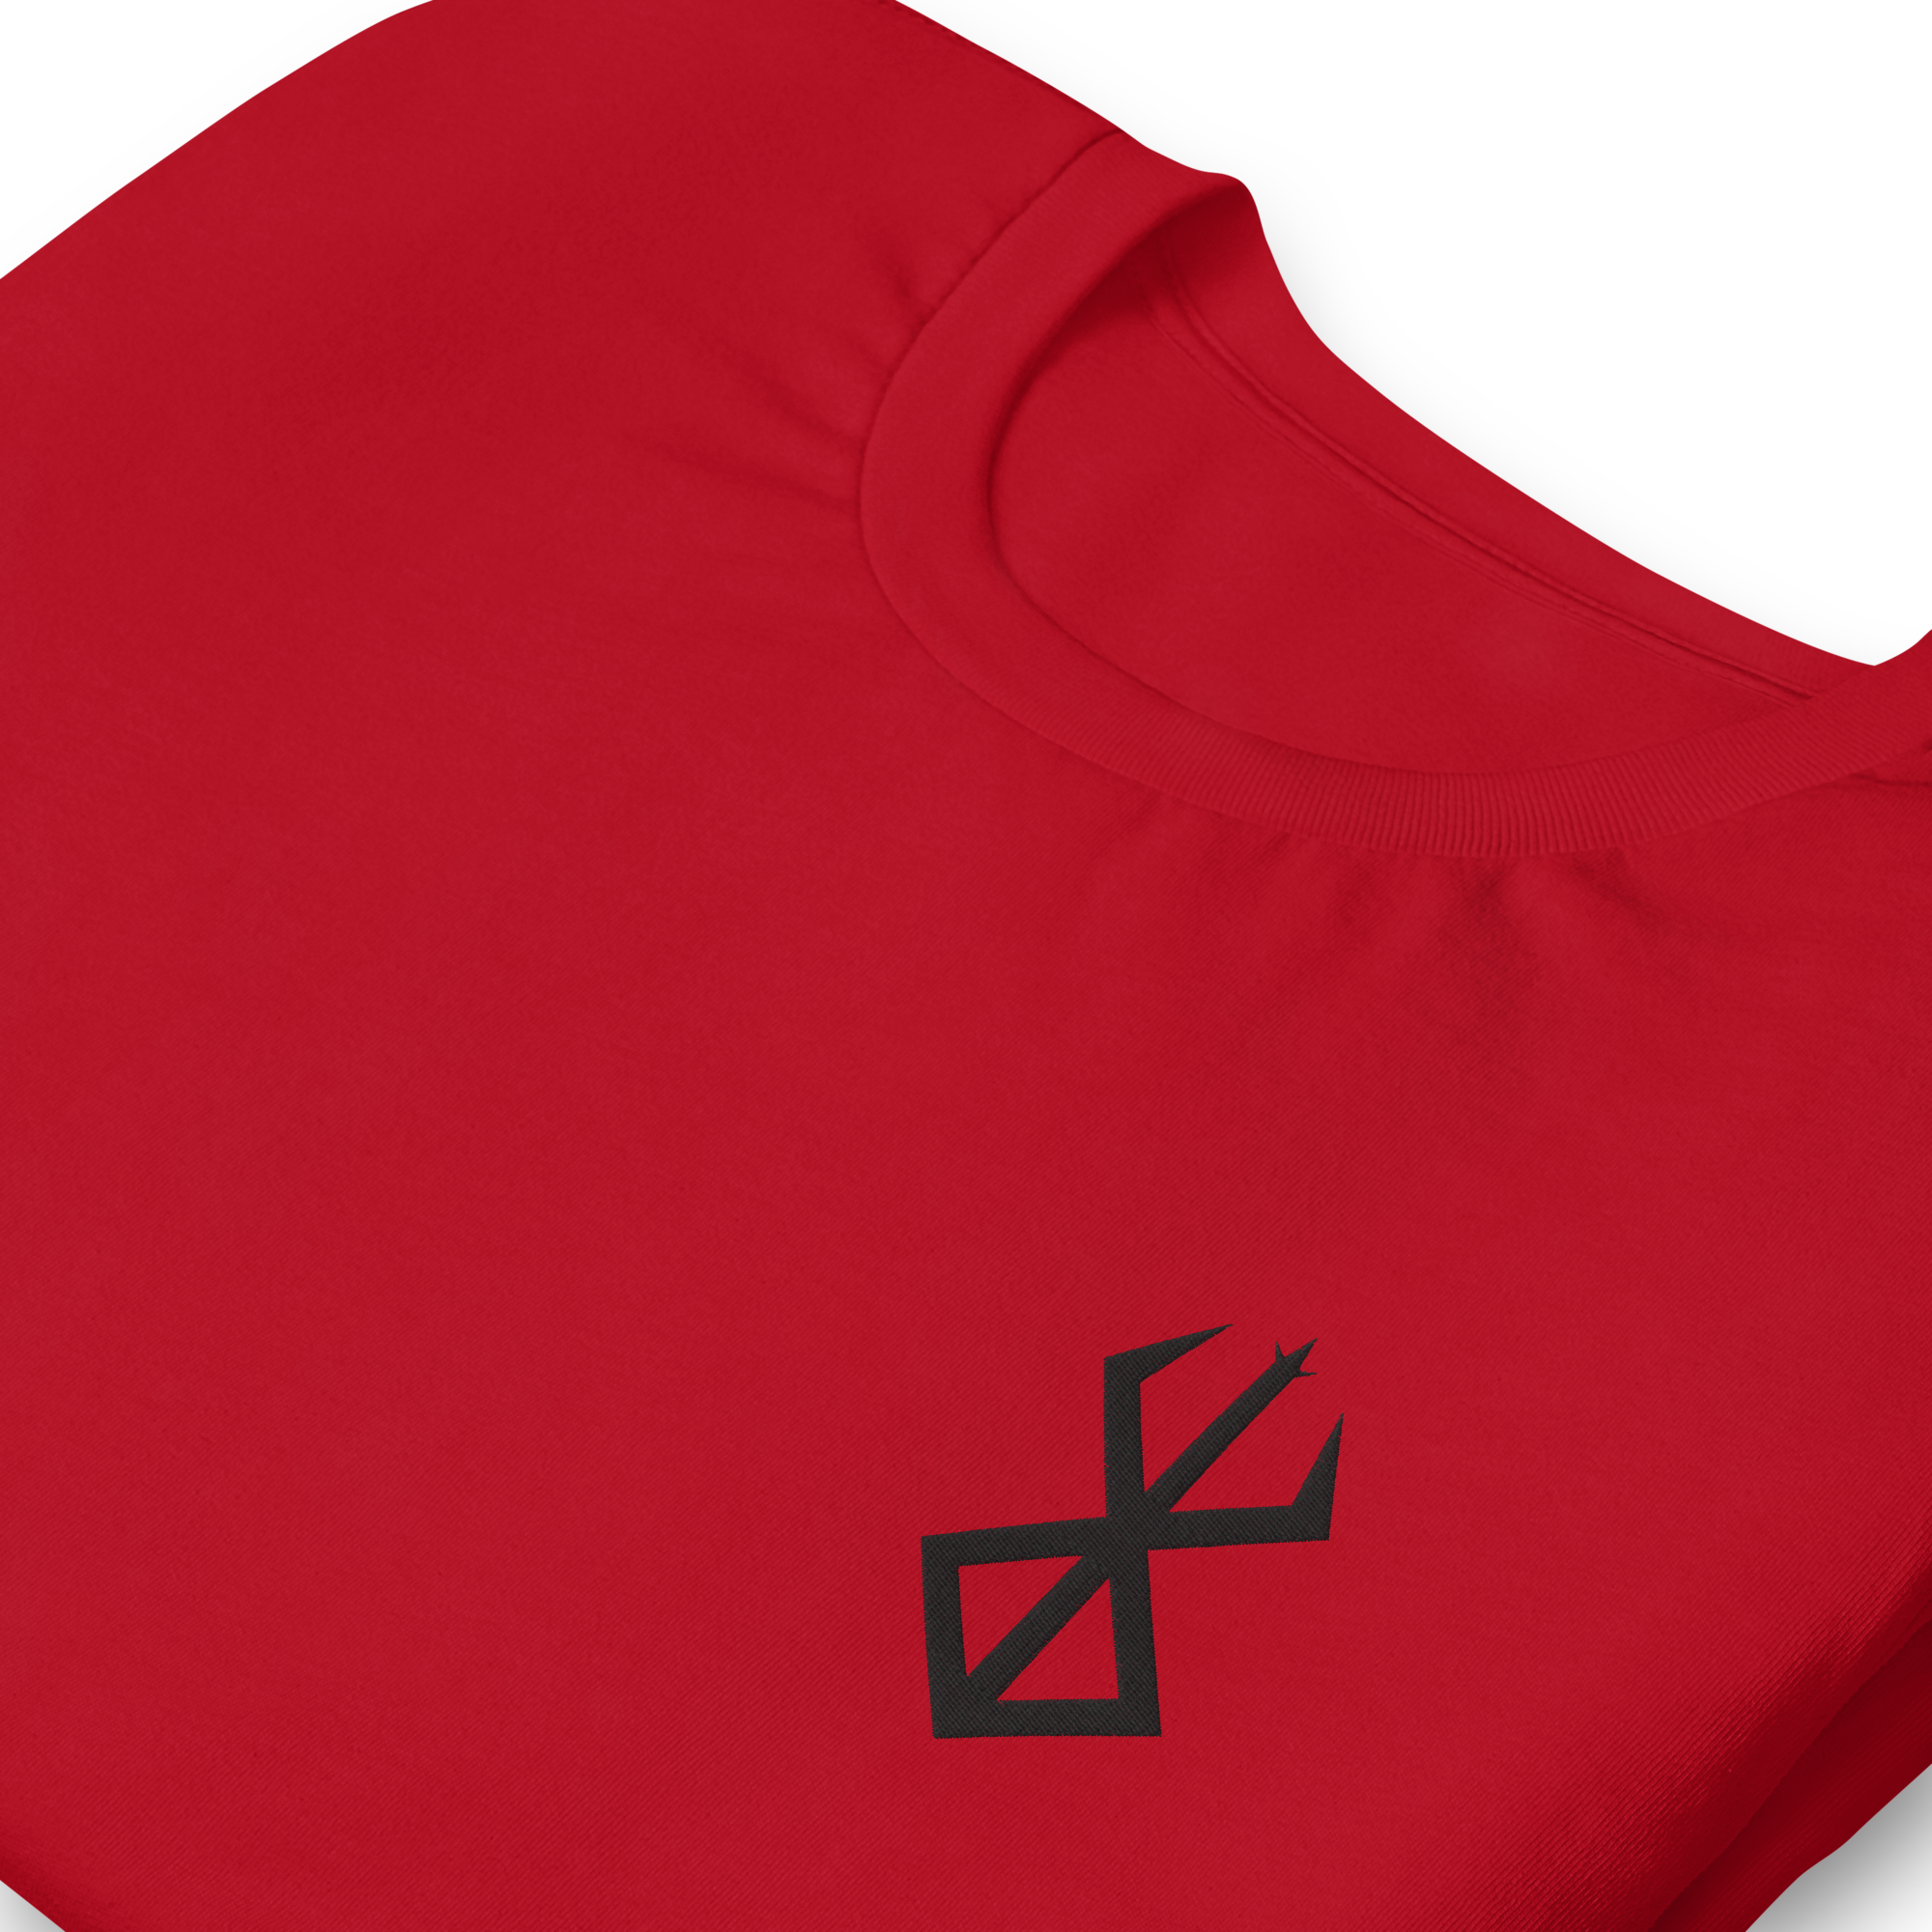 Brand of Sacrifice - Embroidery T-Shirt